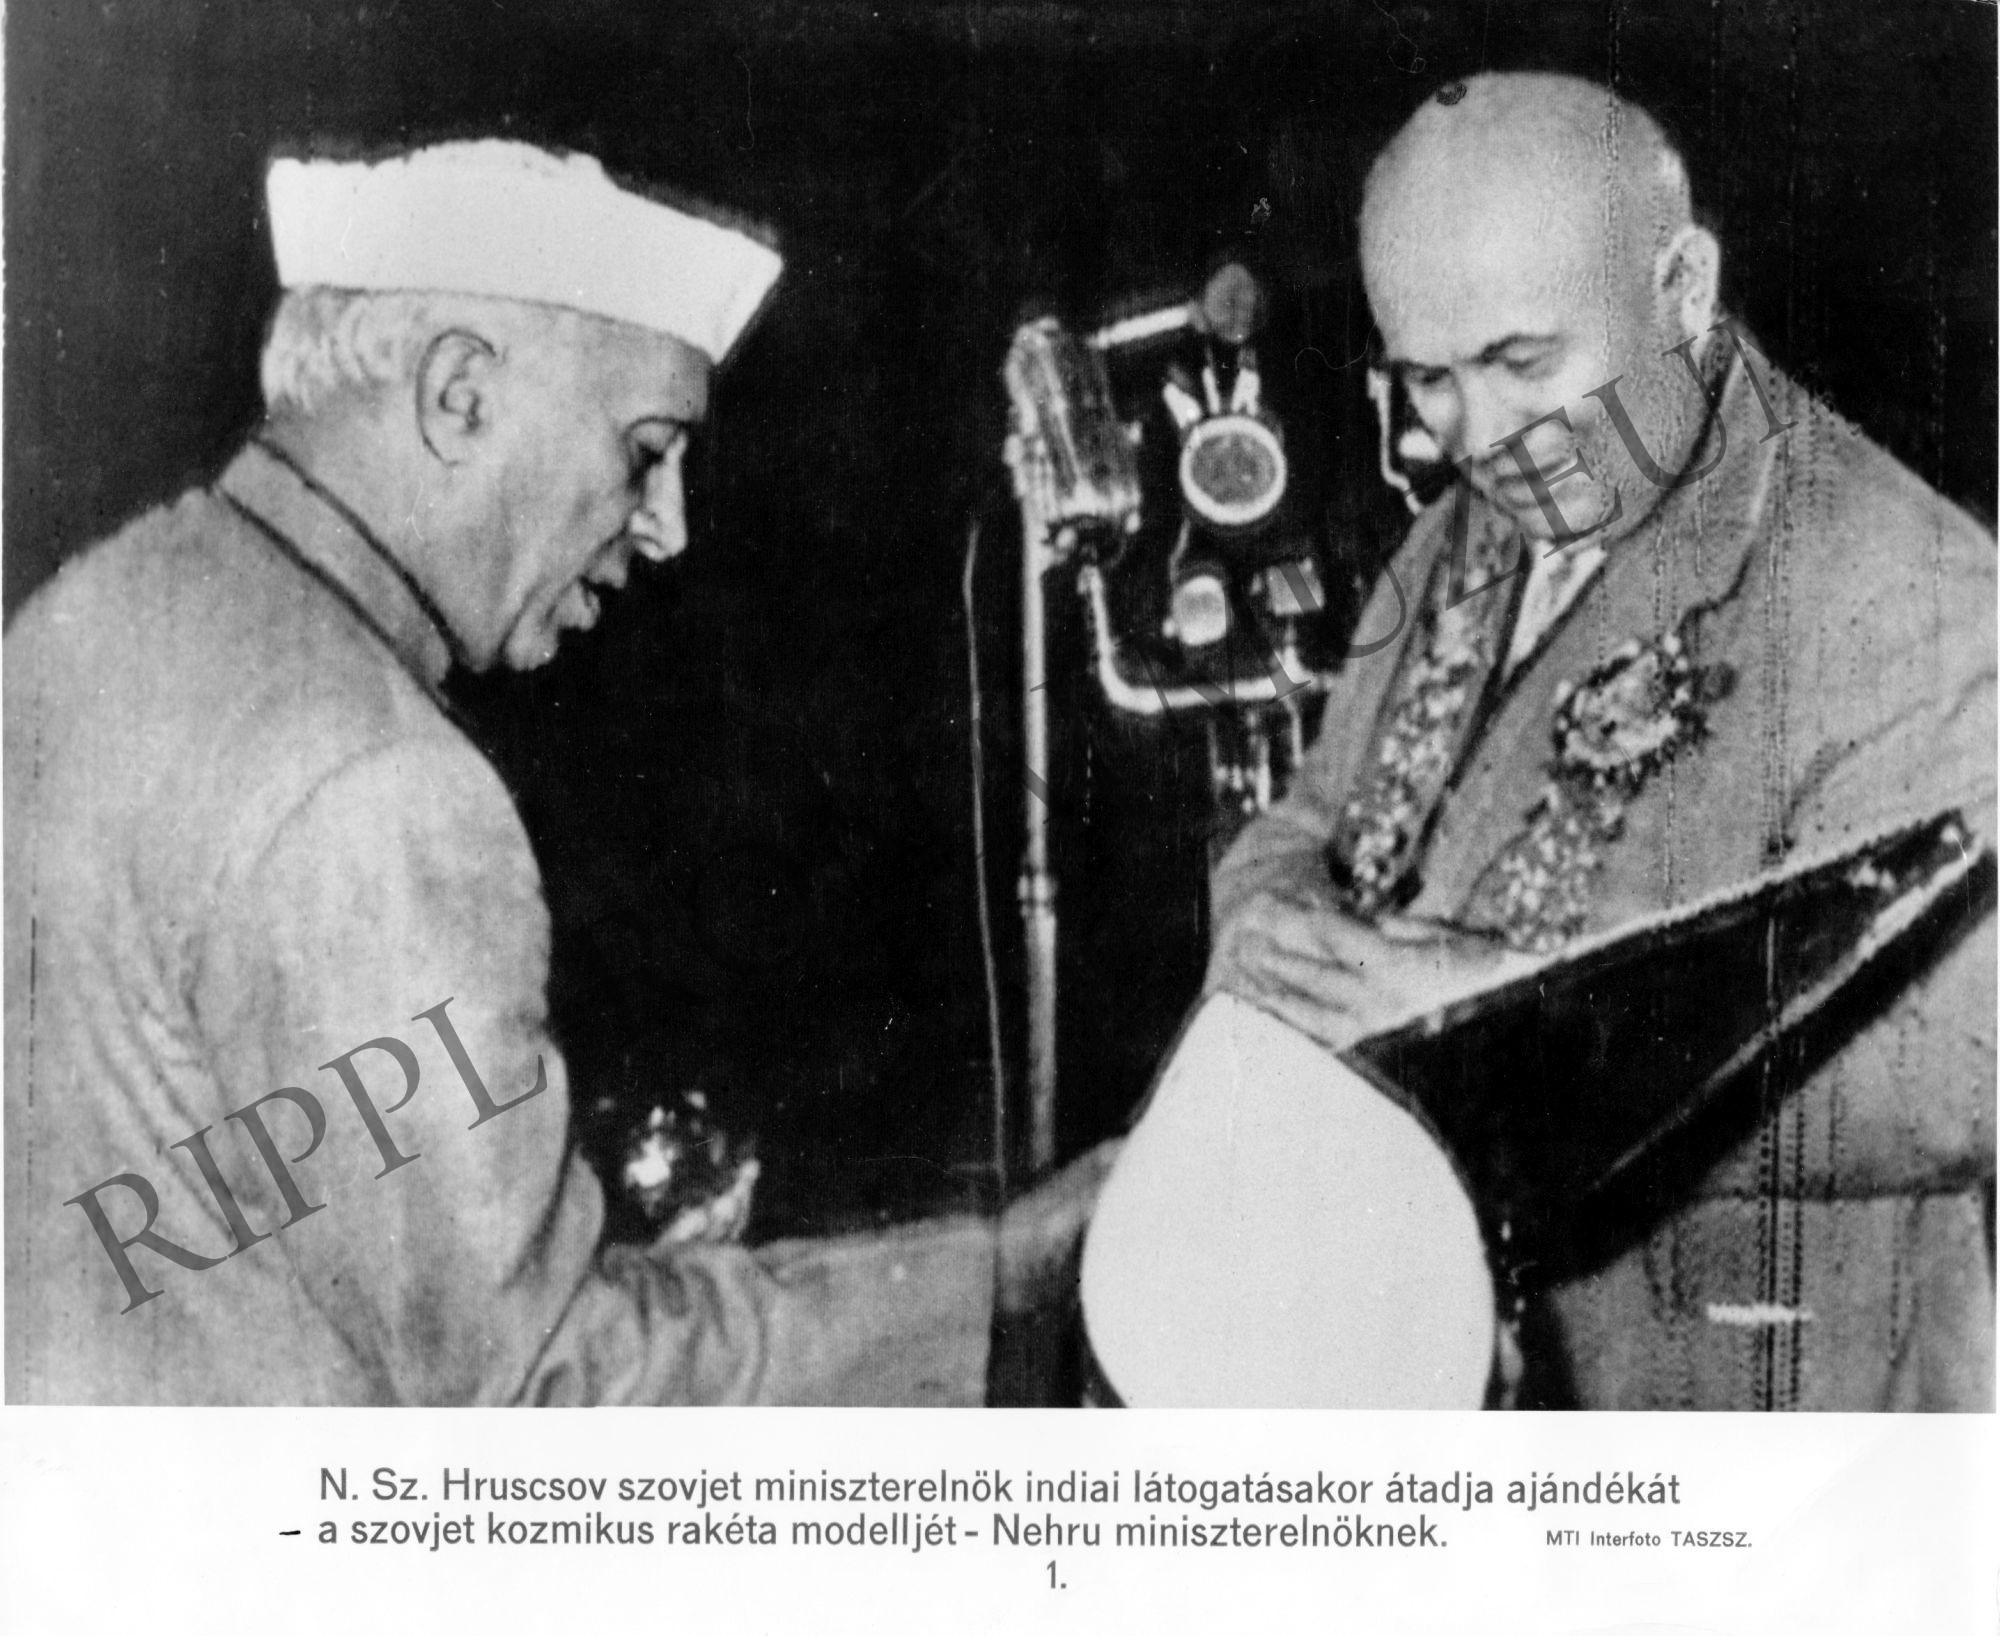 Hruscsov és Nehru Indiában. (Rippl-Rónai Múzeum CC BY-NC-SA)